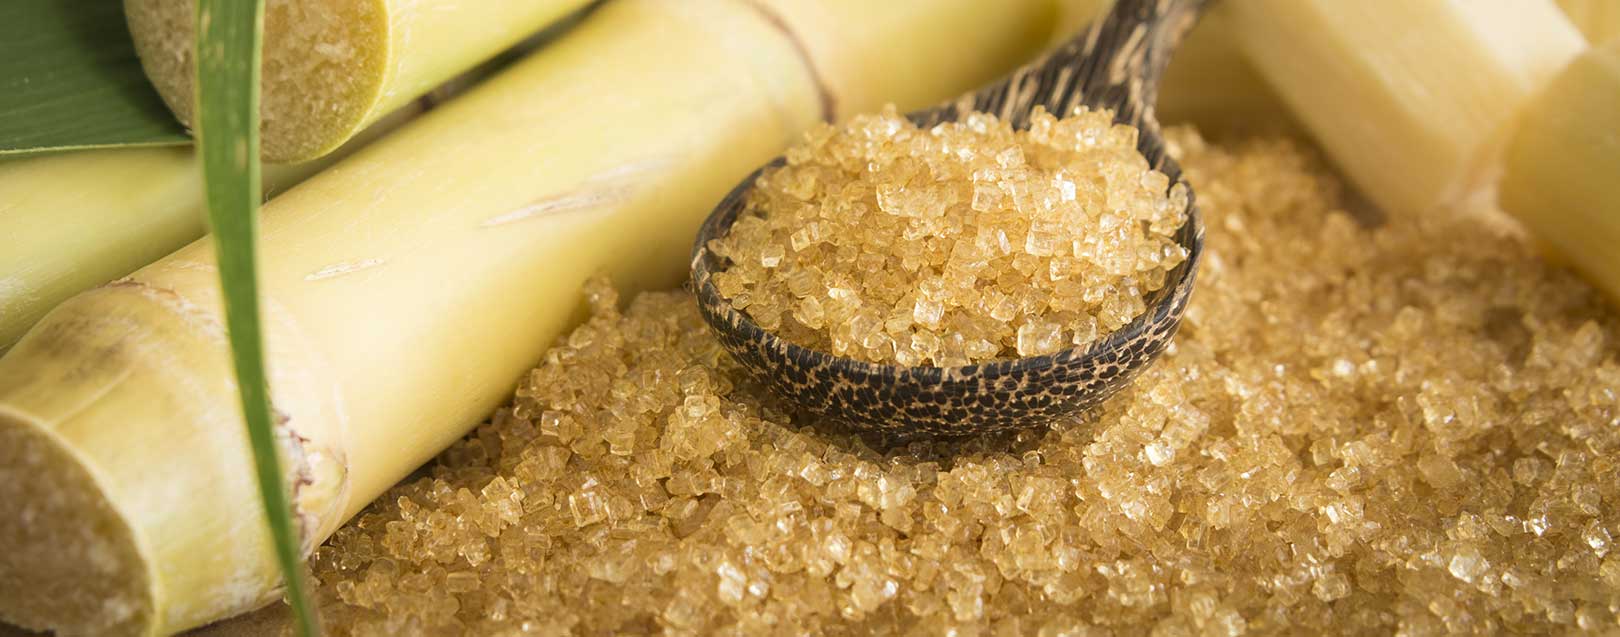 Sugar price rise 'inevitable' due to sugarcane FRP hike: NFCSF